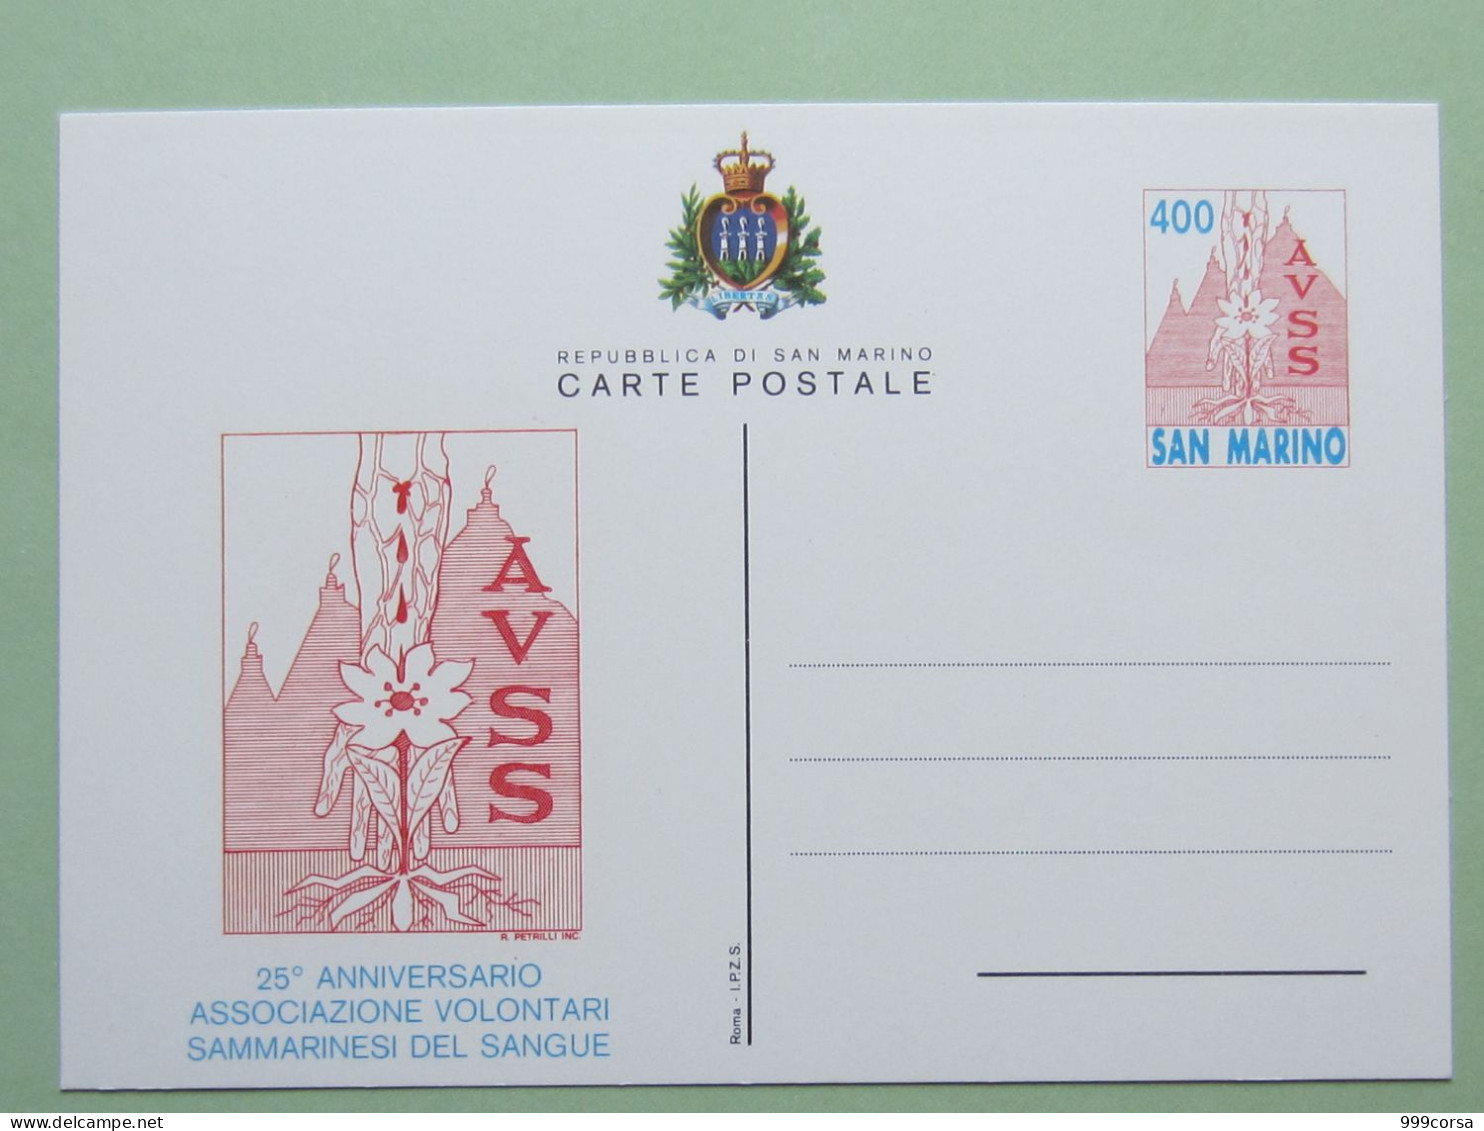 San Marino,lotto Interi Postali (busta Asiago Arte Filatelica,cart.post.Alfa Romeo 75°ann.,aerogramma Olimphilex 1985,ec - Postal Stationery